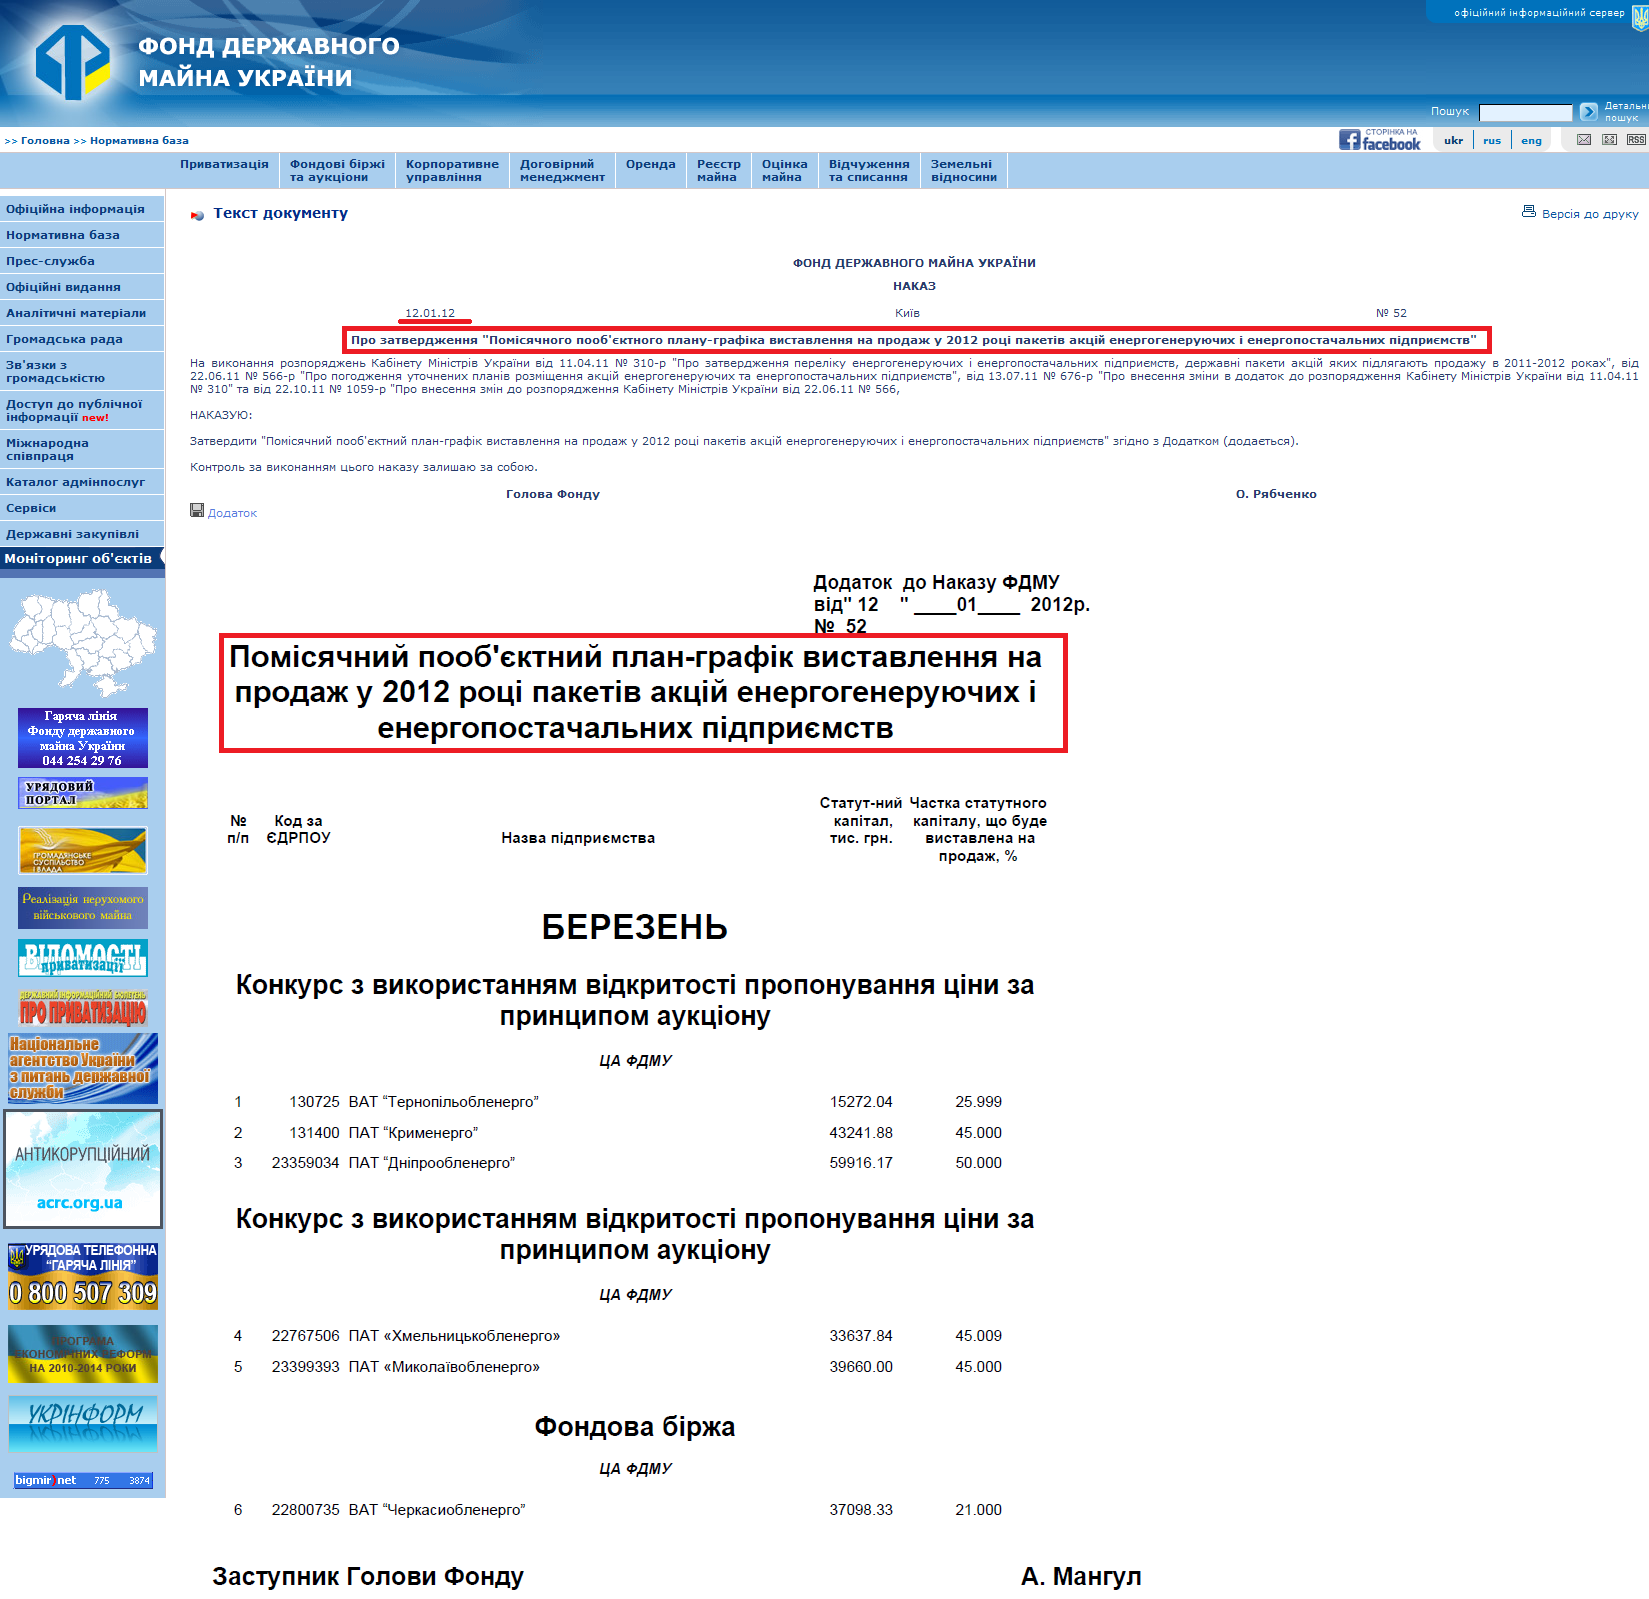 http://www.spfu.gov.ua/ukr/doc_view.php?id=2318&id_doc_type=0&sort_id=&text=&page=18